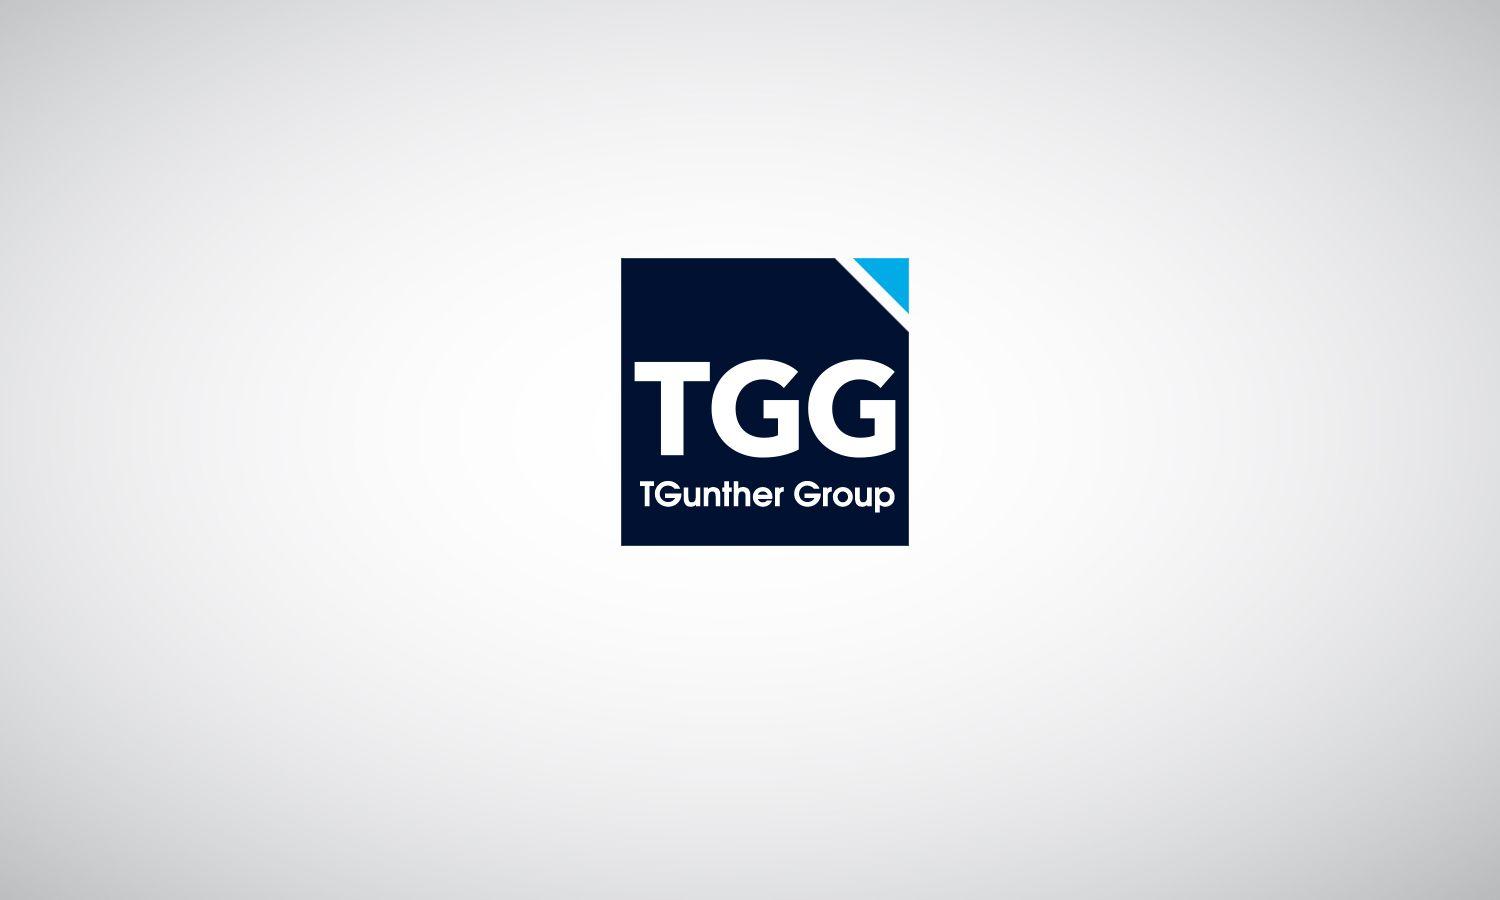 TGG Logo - Elegant, Playful, It Company Logo Design for TGG TGunther Group by ...